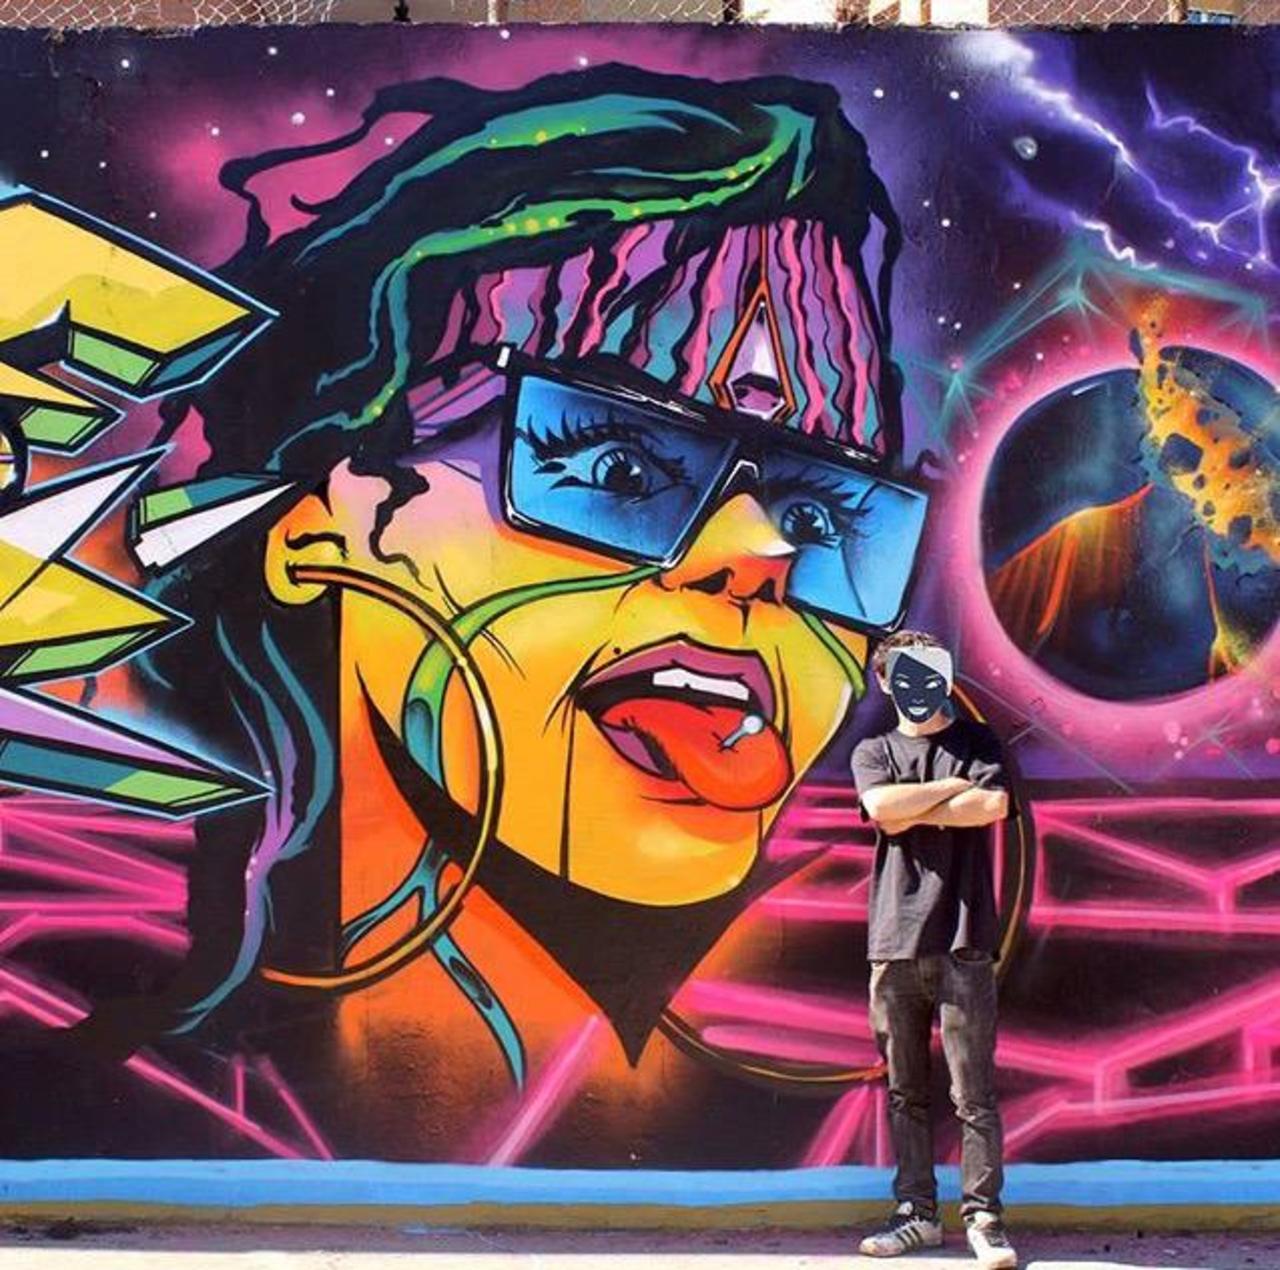 Brilliant new Street Art by the artist Jaycaes #art #graffiti #mural #streetart http://t.co/TiNYDNPlxf … … … http://twitter.com/charlesjackso14/status/649568931670269953